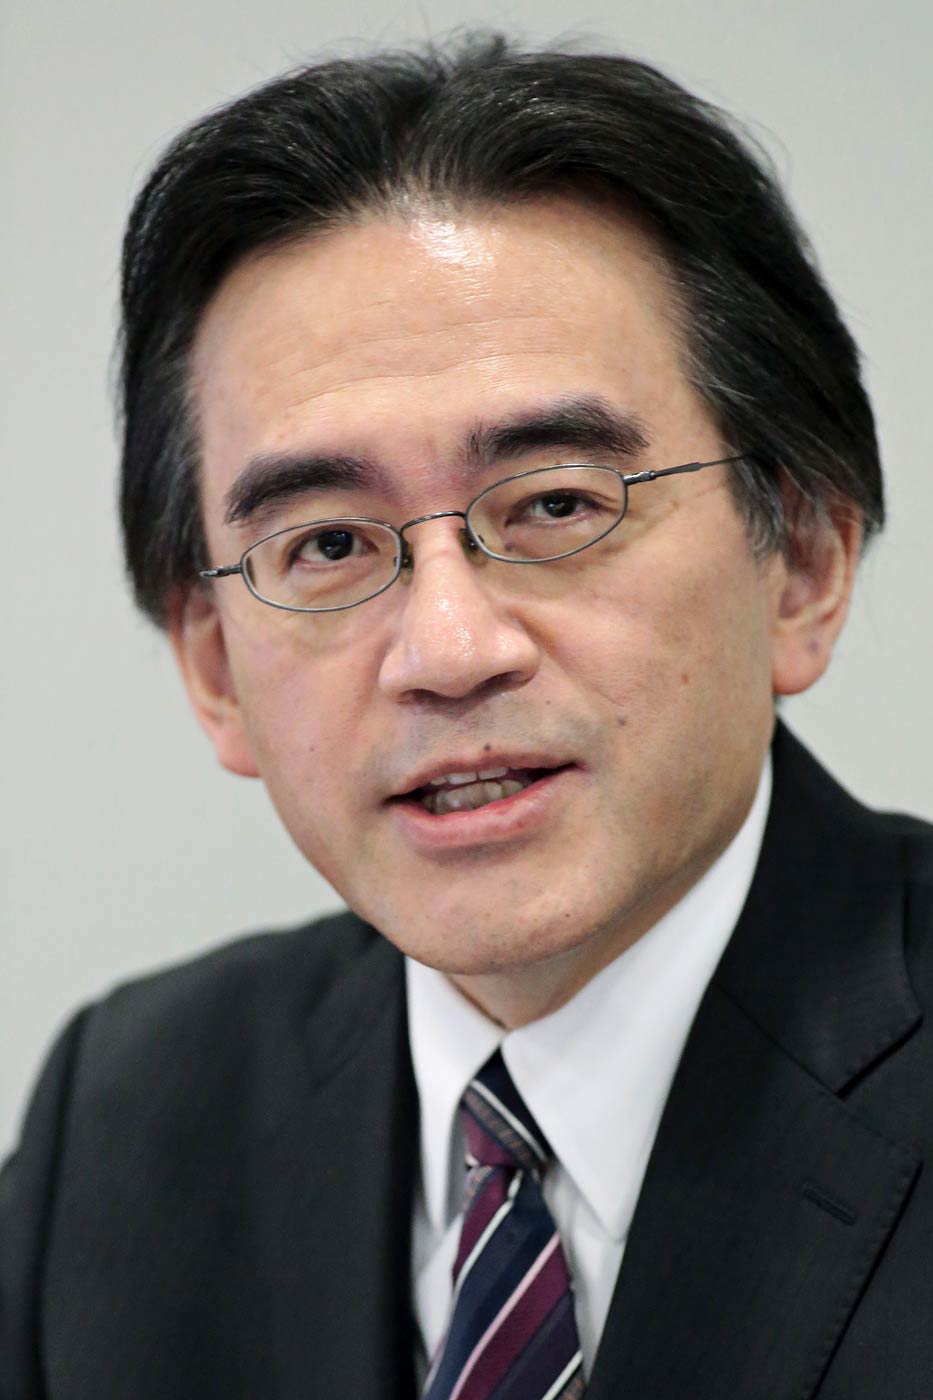 Nintendo President and CEO Satoru Iwata speaks during a news conference in Osaka, Japan, on Oct. 29, 2014. (Yuzuru Yoshikawa—Bloomberg/Getty Images)